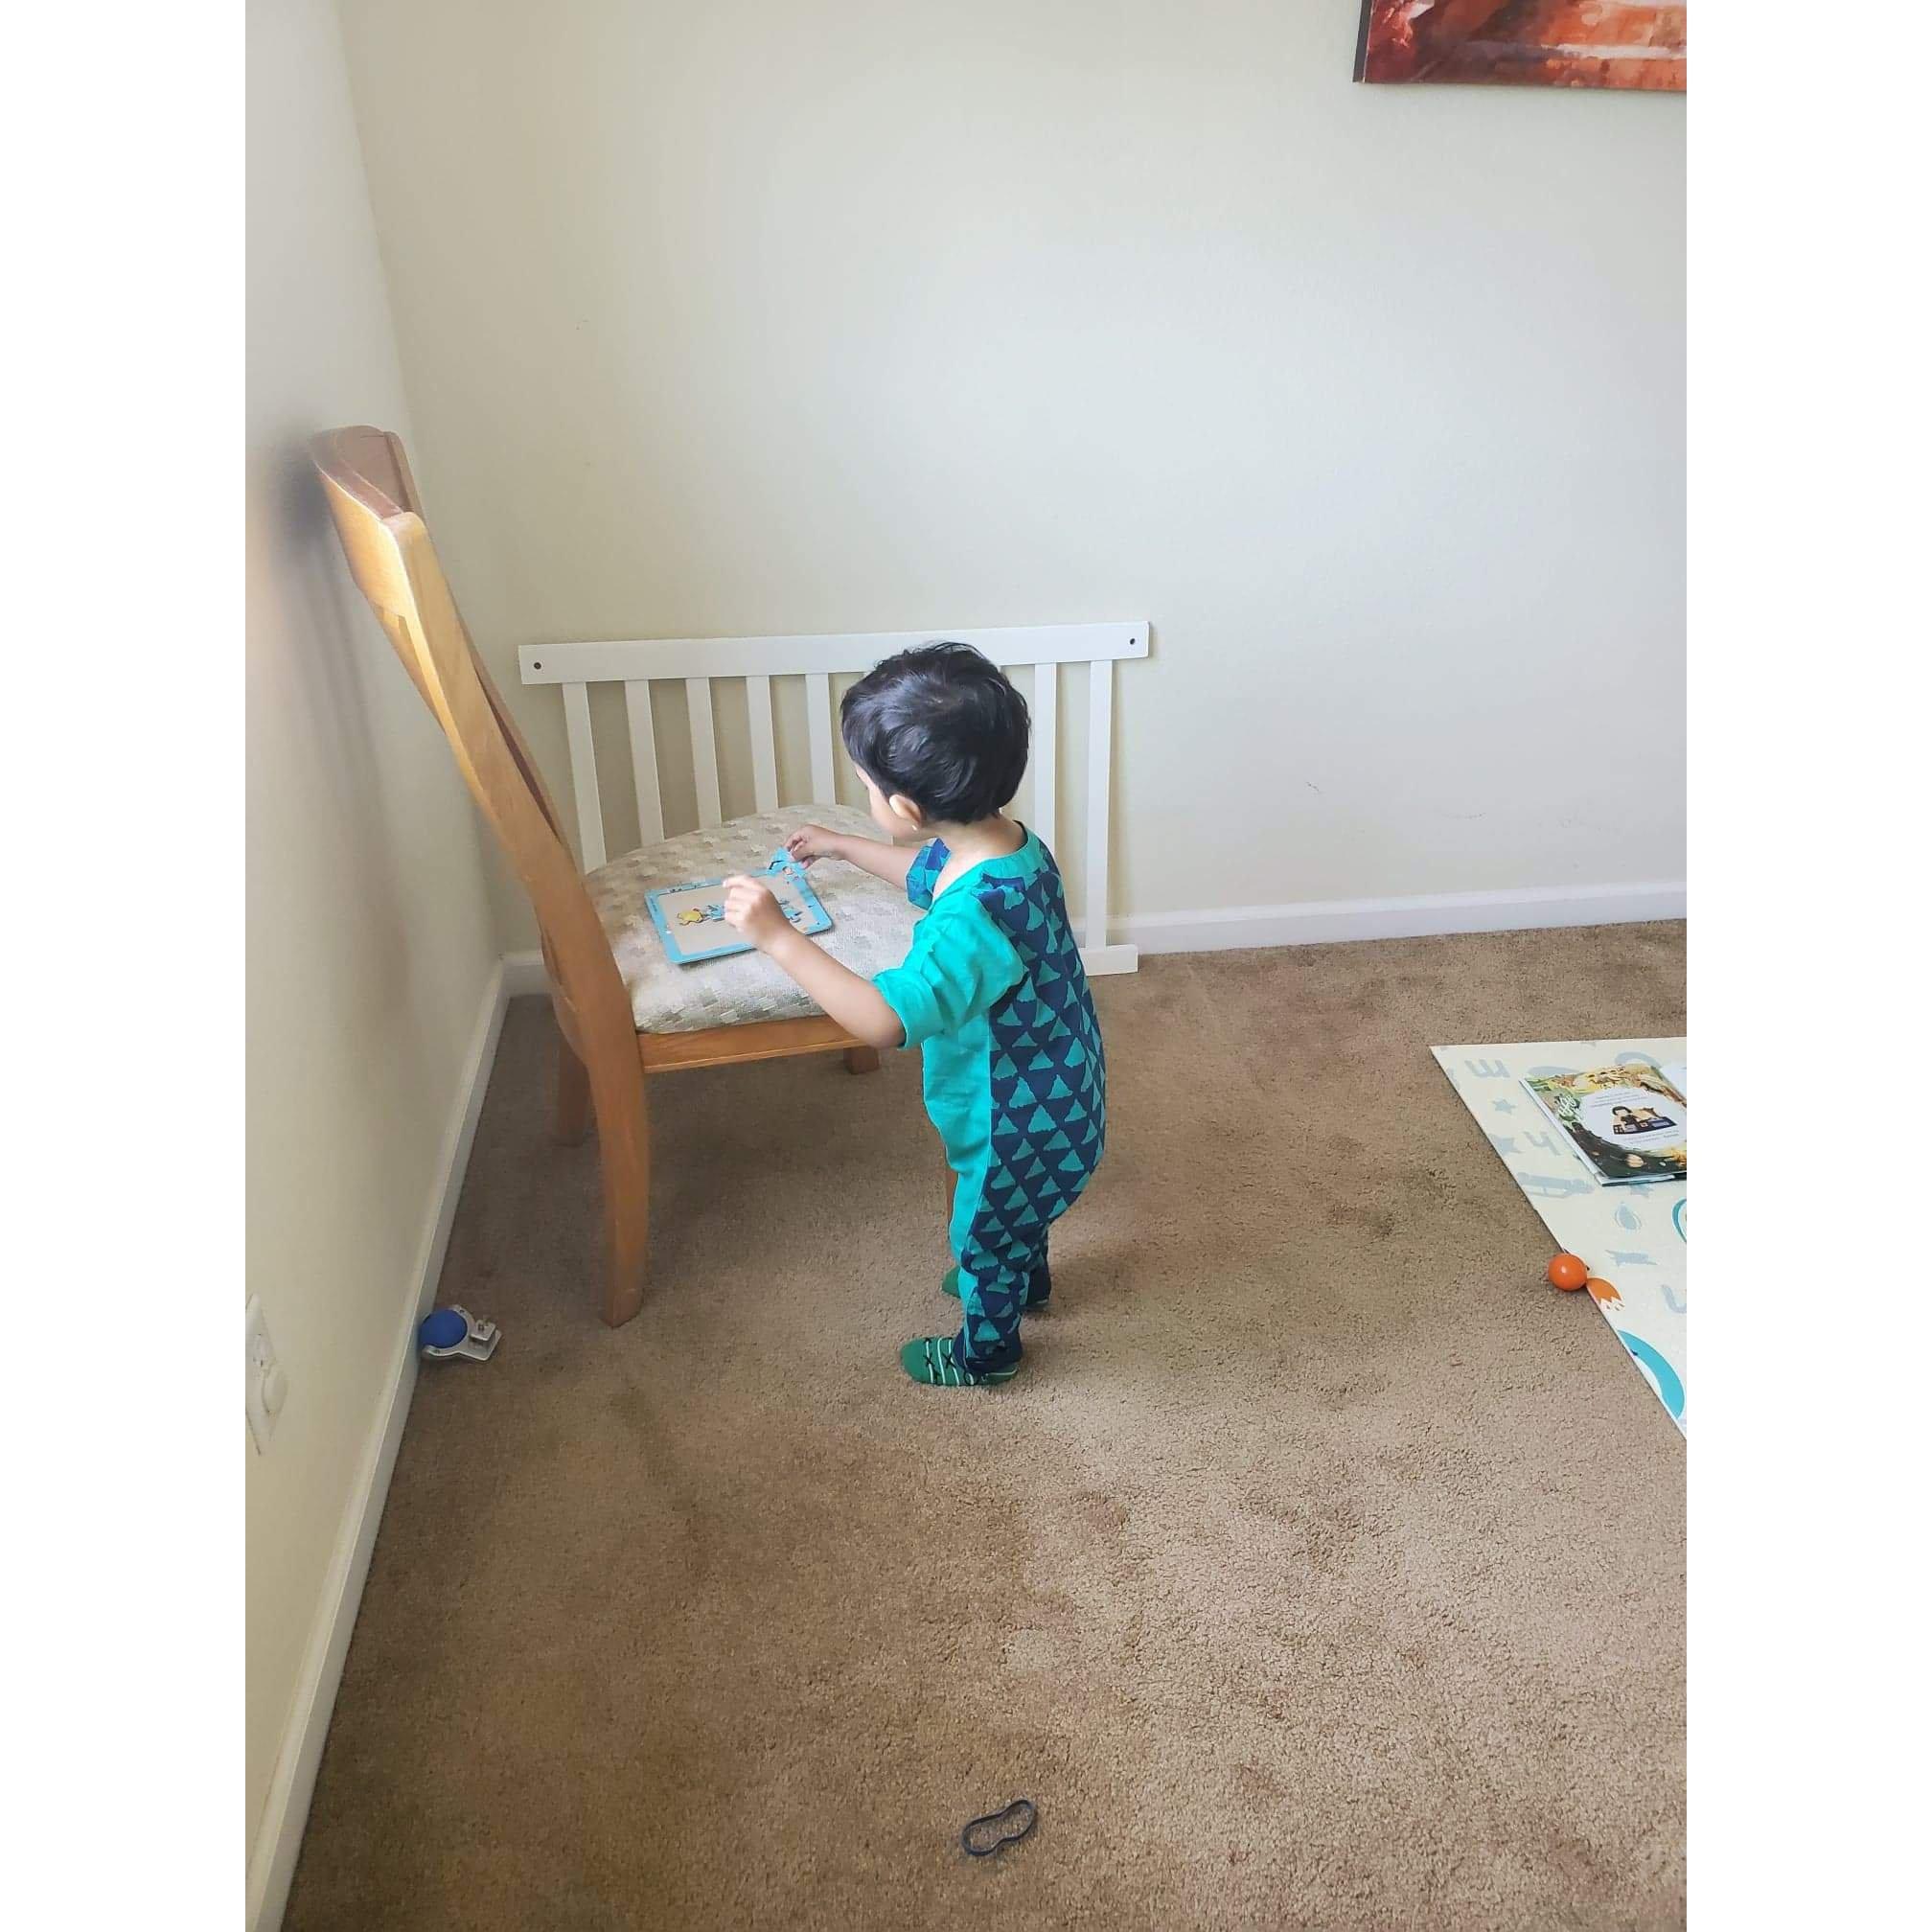 Expandable Jumpsuit Toddler  Cone Print - Snug Bub USA